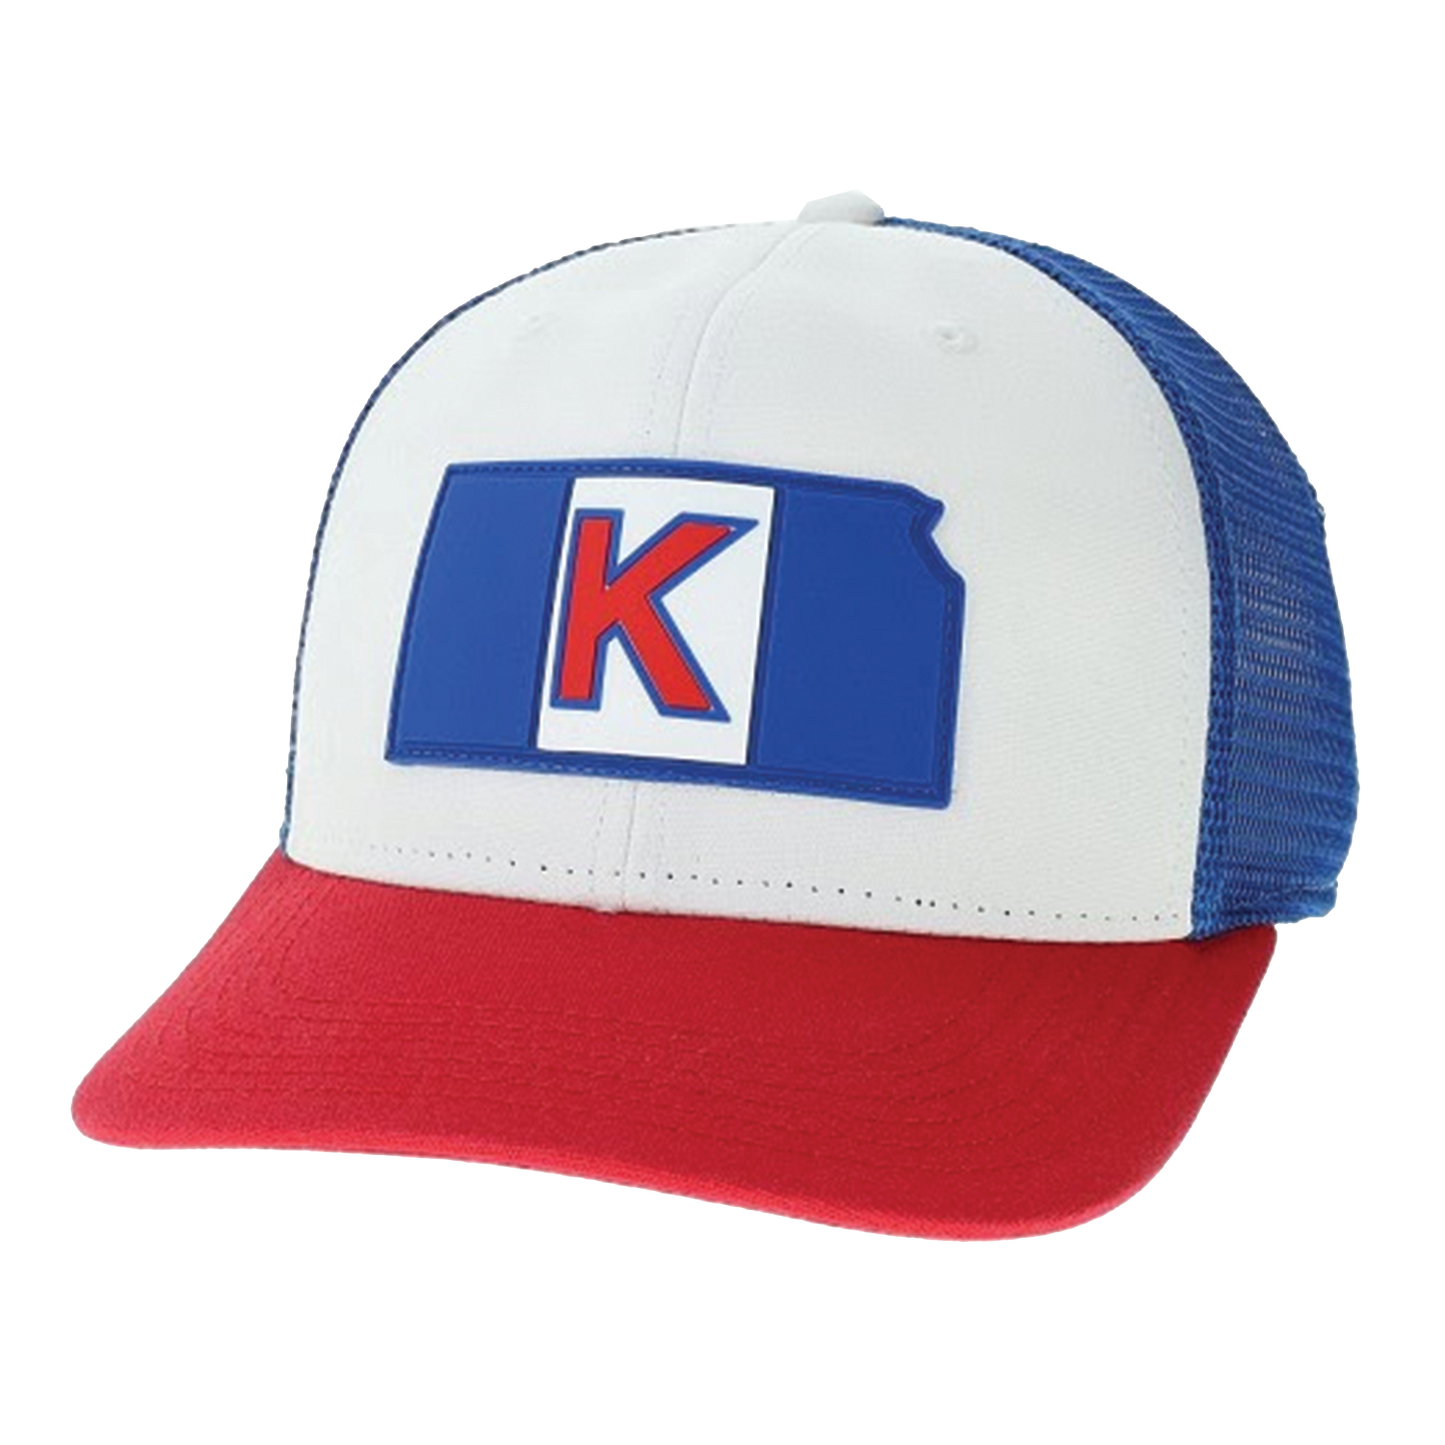 Kansas Jayhawks Gameday Flag Adjustable Hat - Red/White/Blue